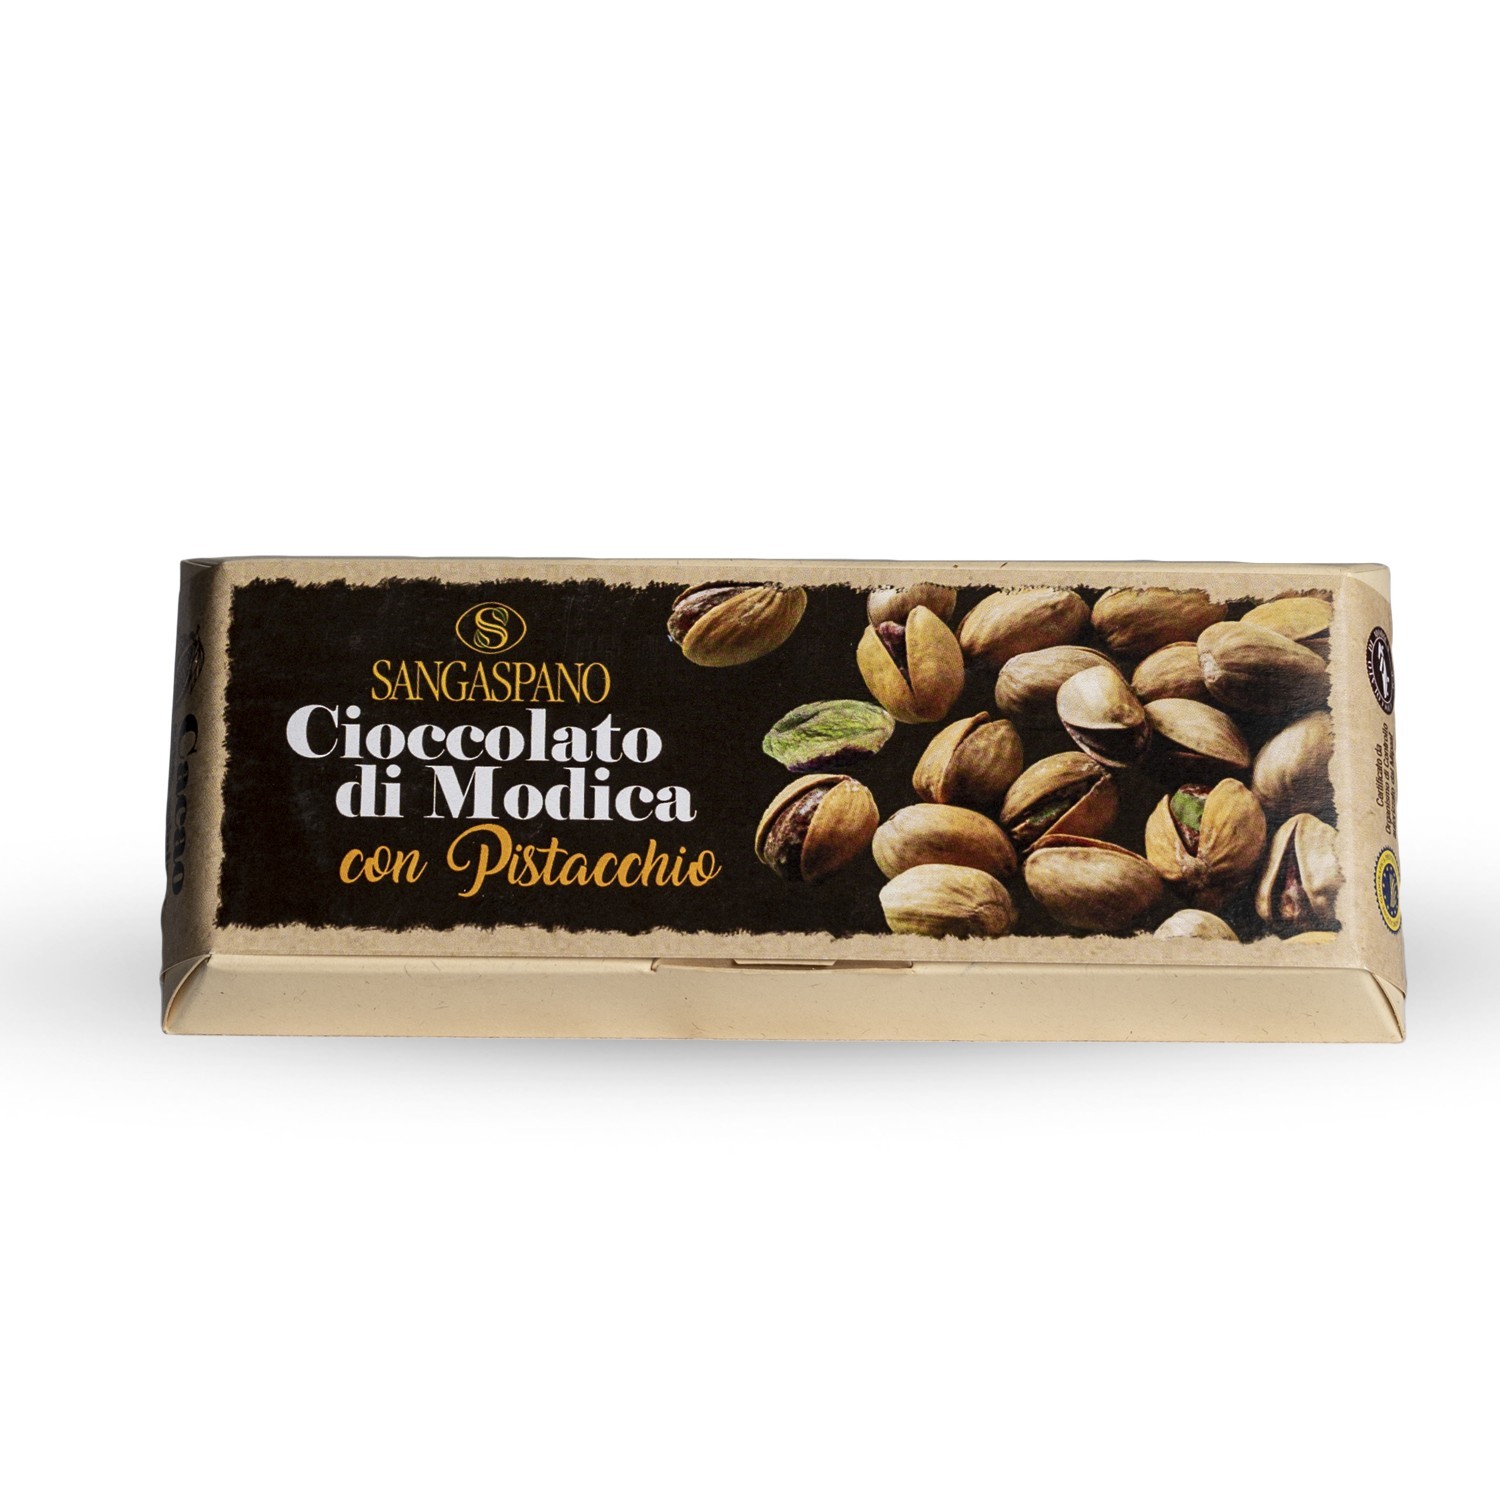 Modica chocolate with pistachio nuts